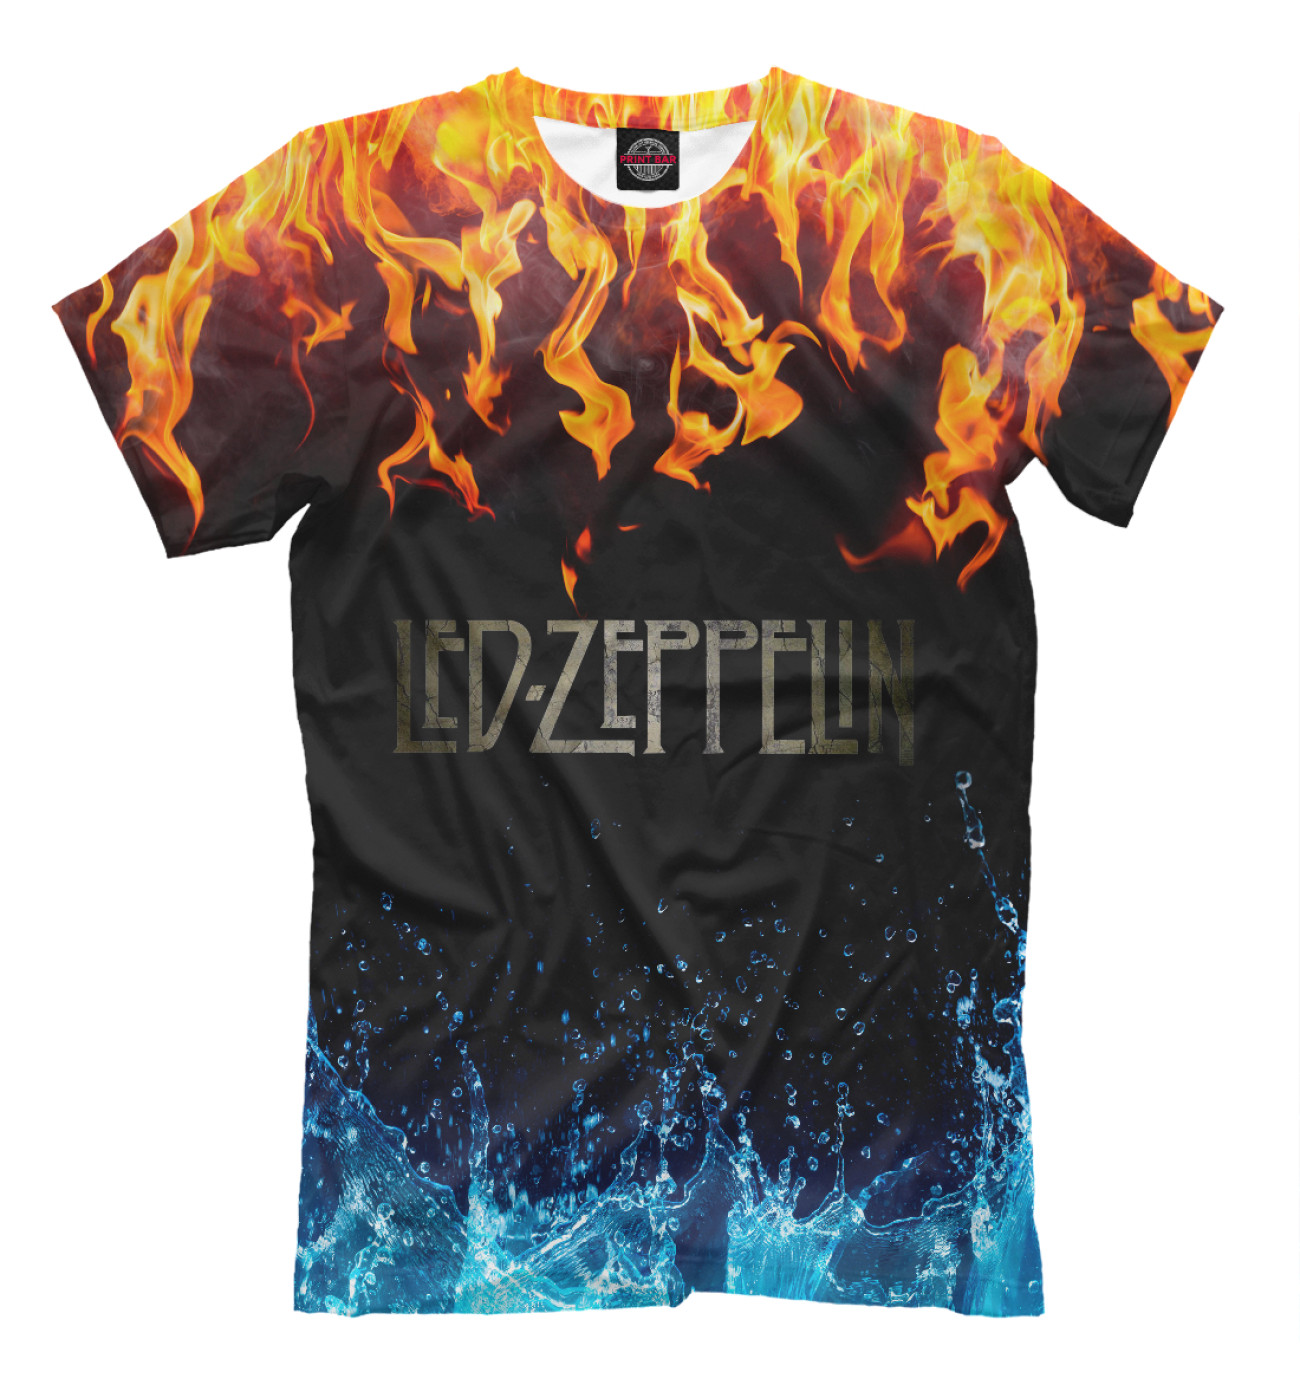 Мужская Футболка Led Zeppelin, артикул: LDZ-782548-fut-2